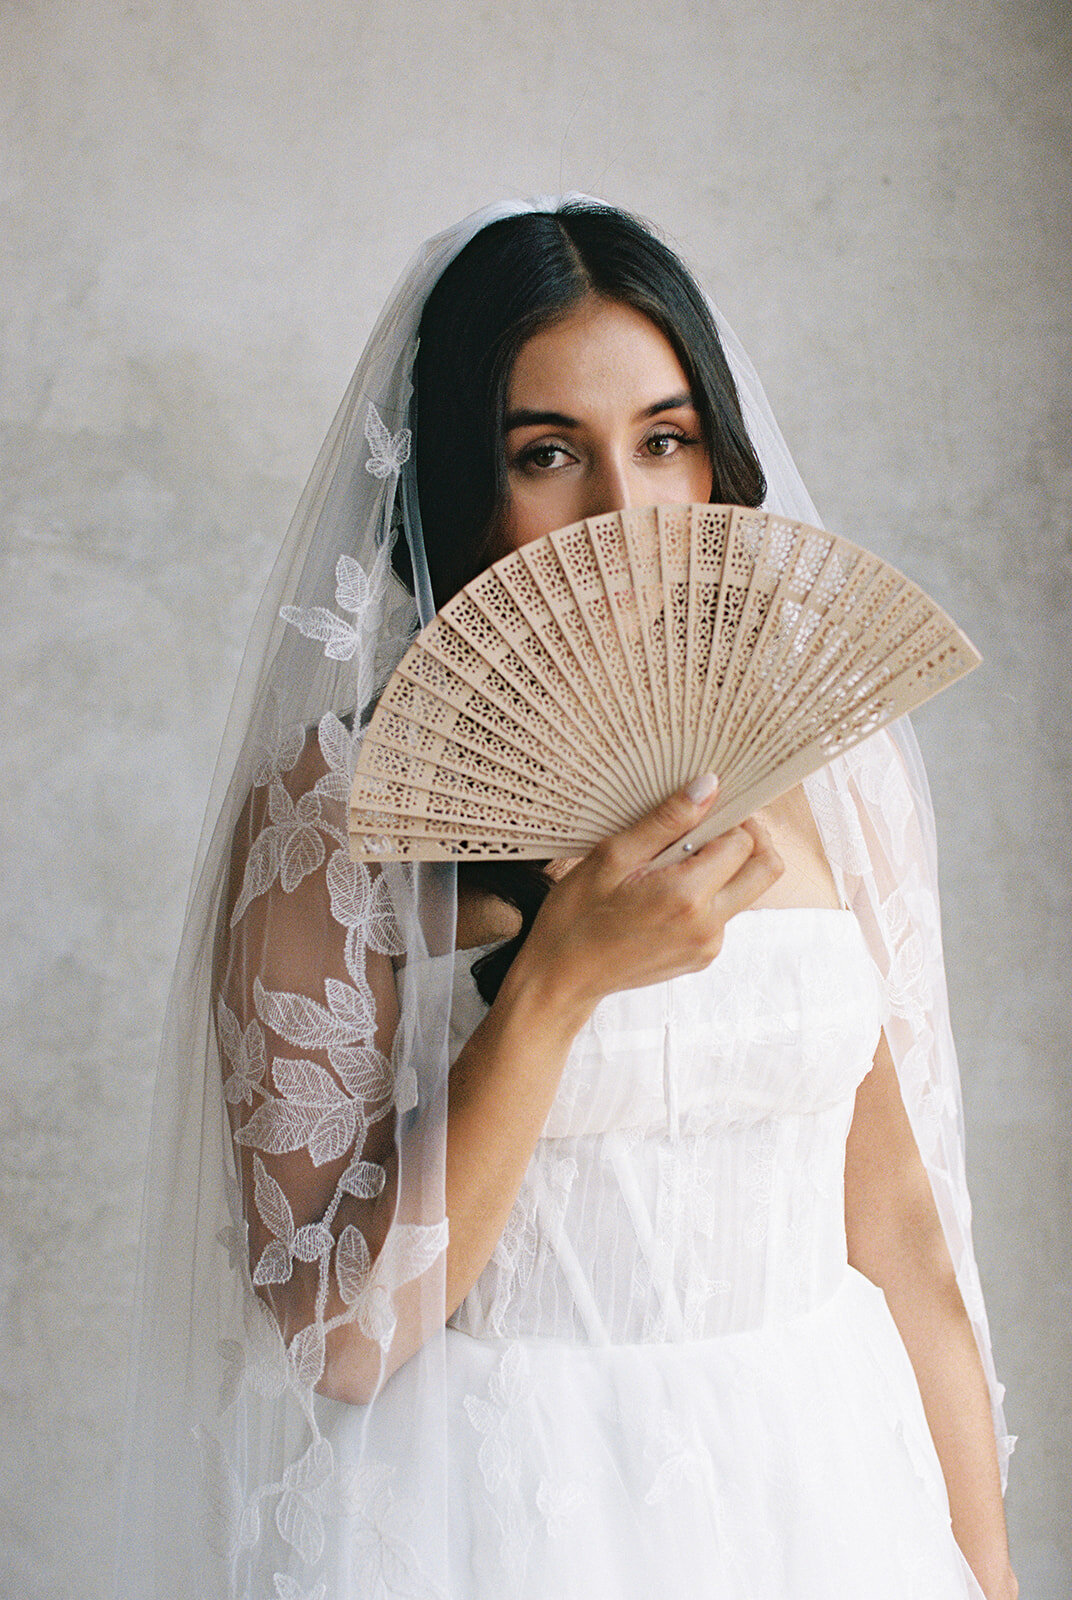 bride poses with folding fan in wedding dress